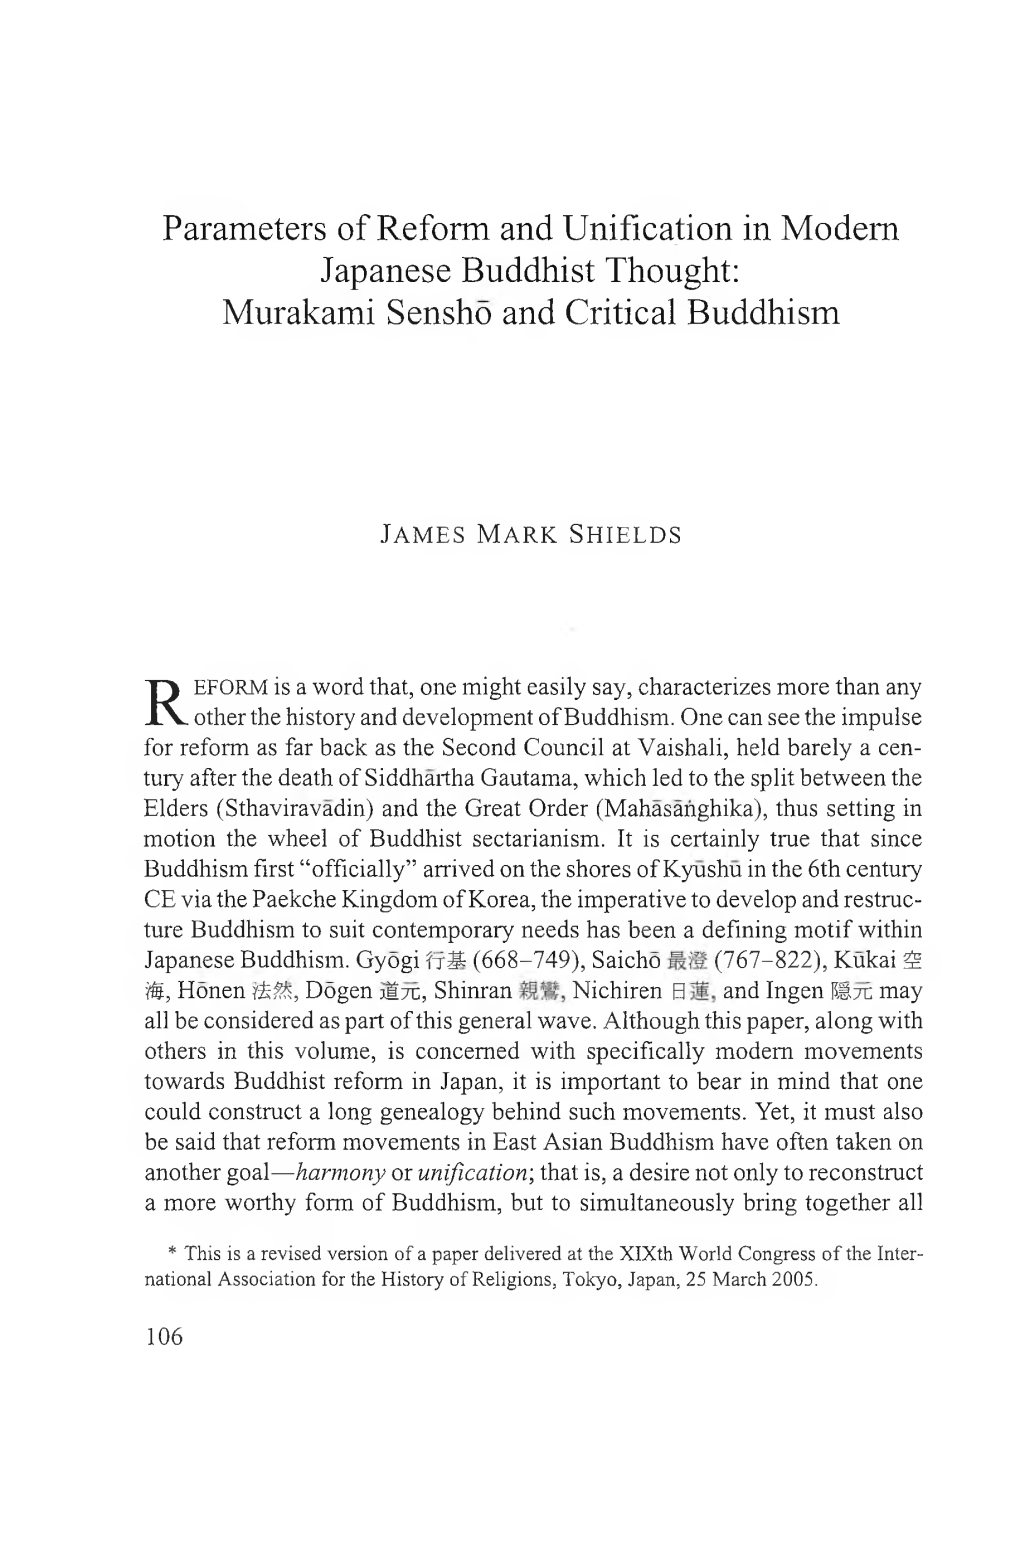 Murakami Senshō and Critical Buddhism